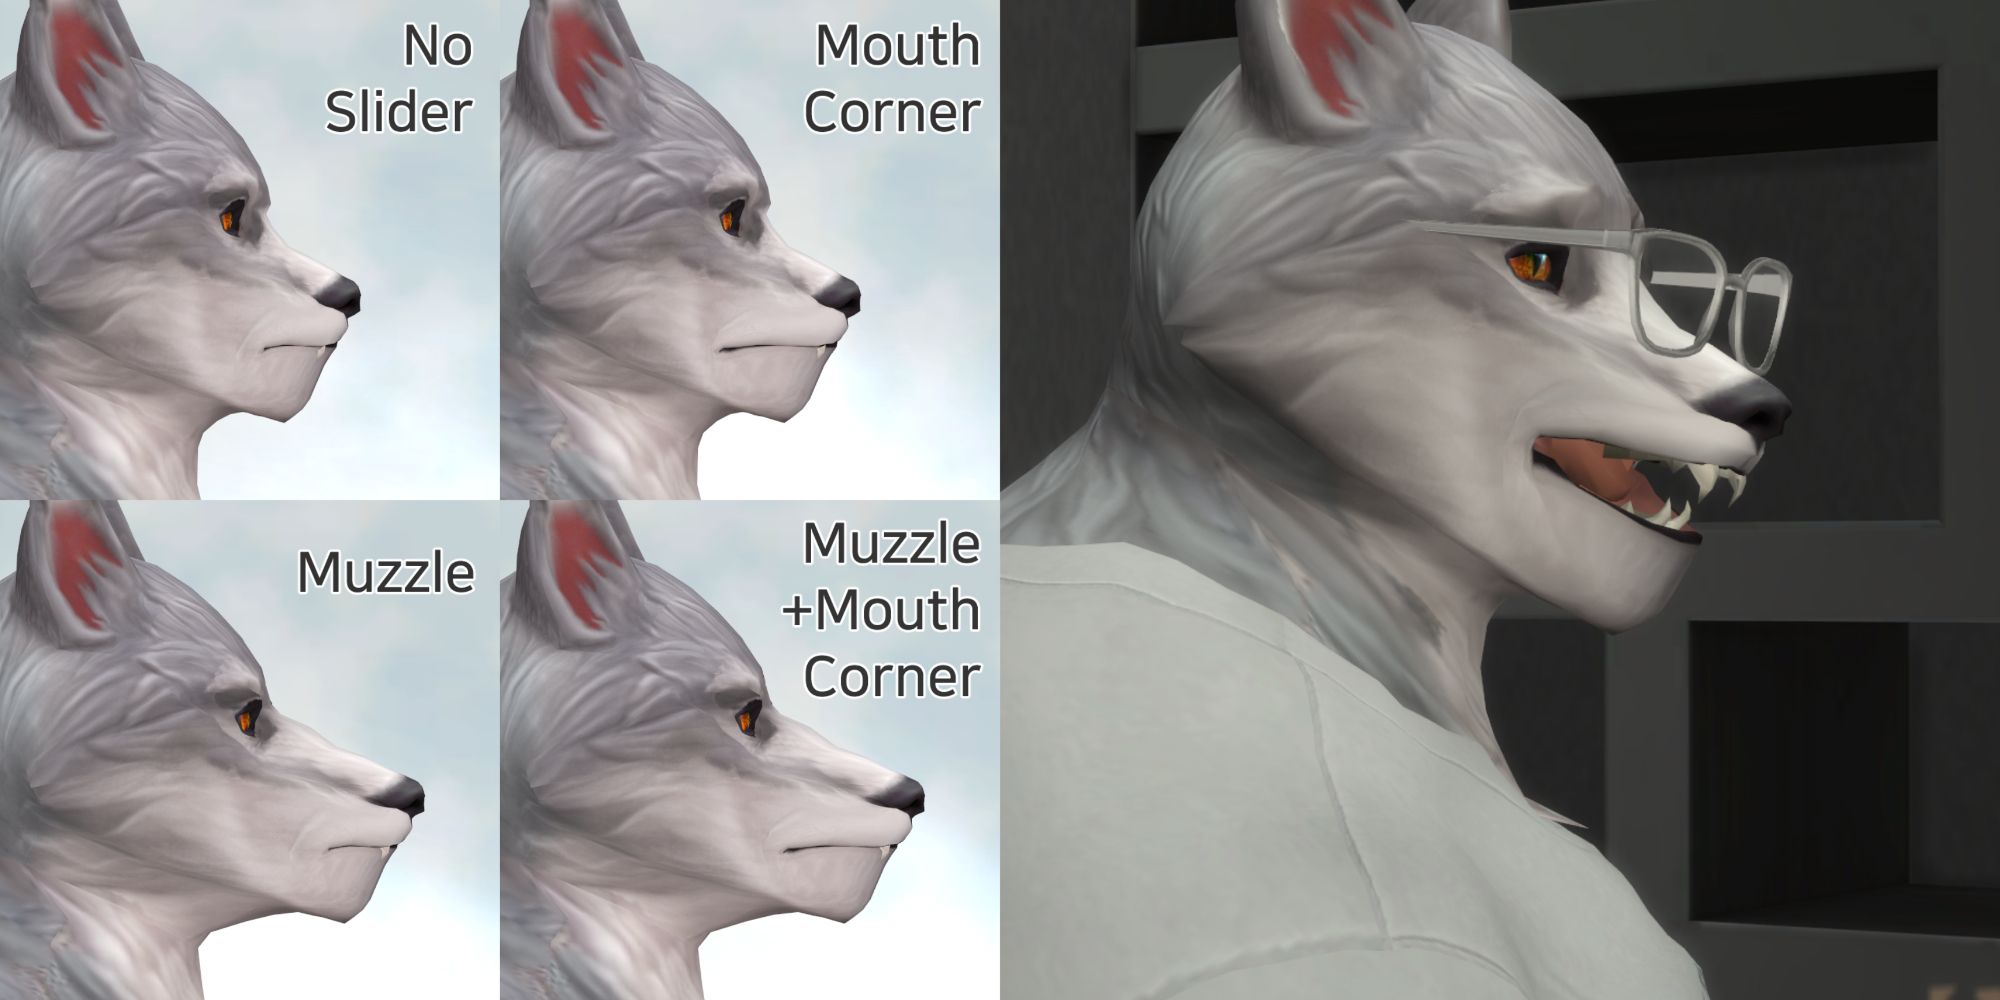 Sims 4 female werewolf body mod - plmdroid